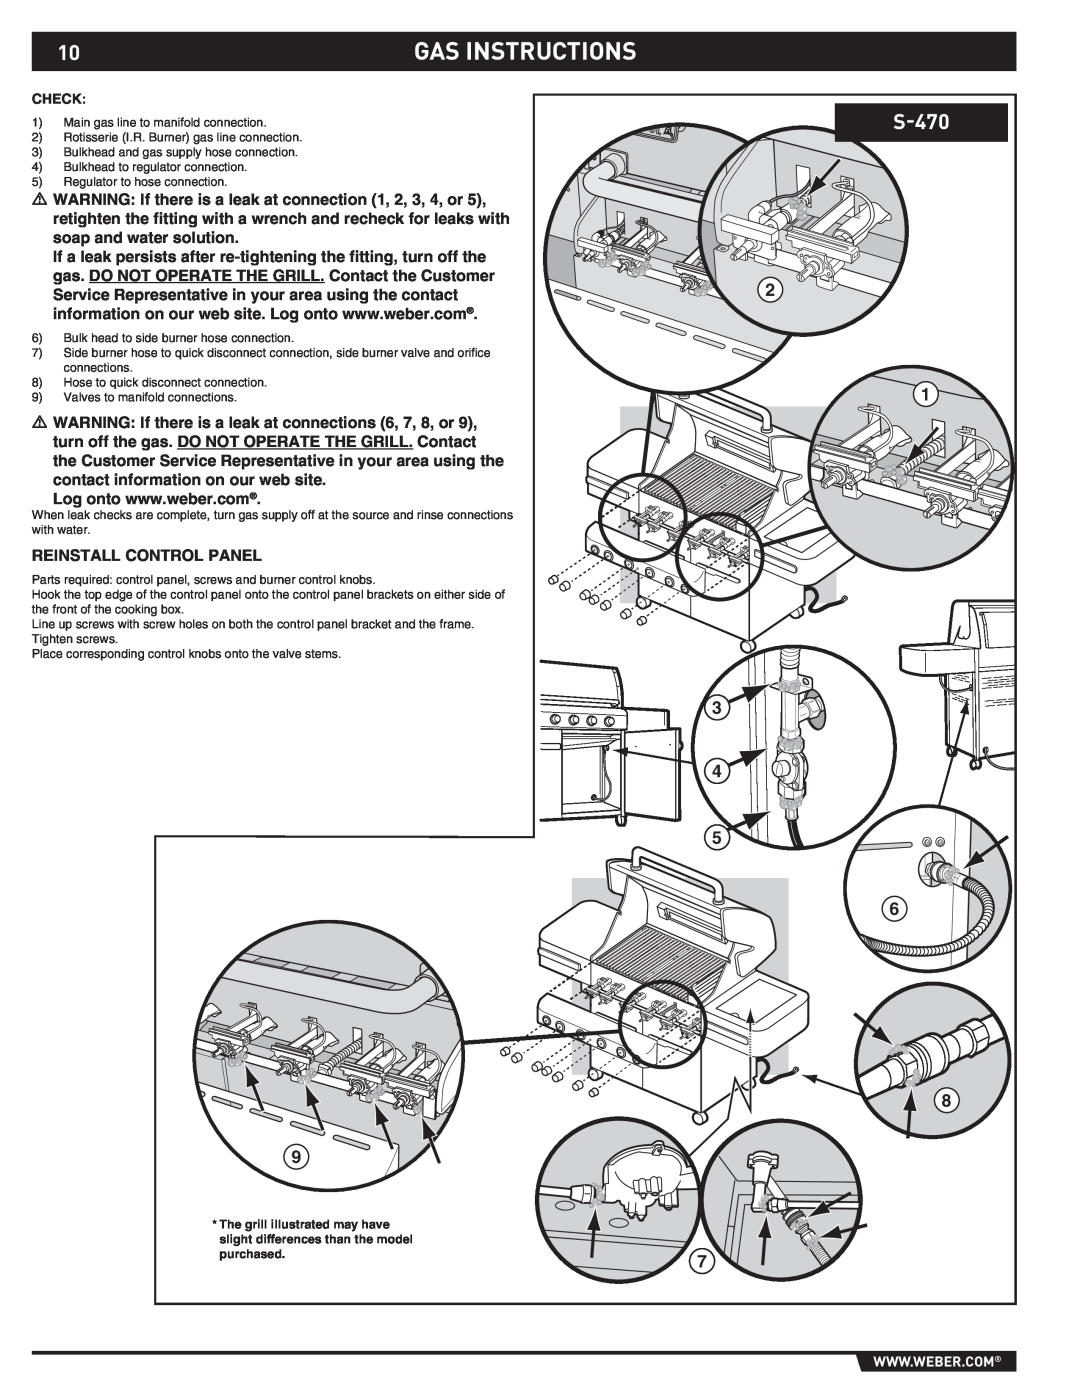 Weber S-470TM manual Gas Instructions 